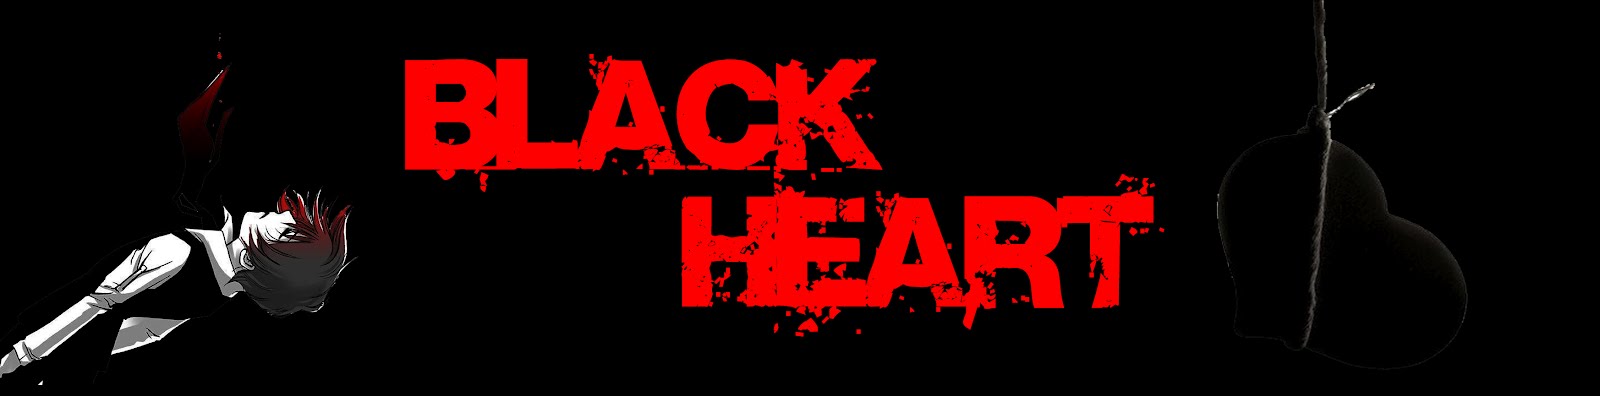 blackheart